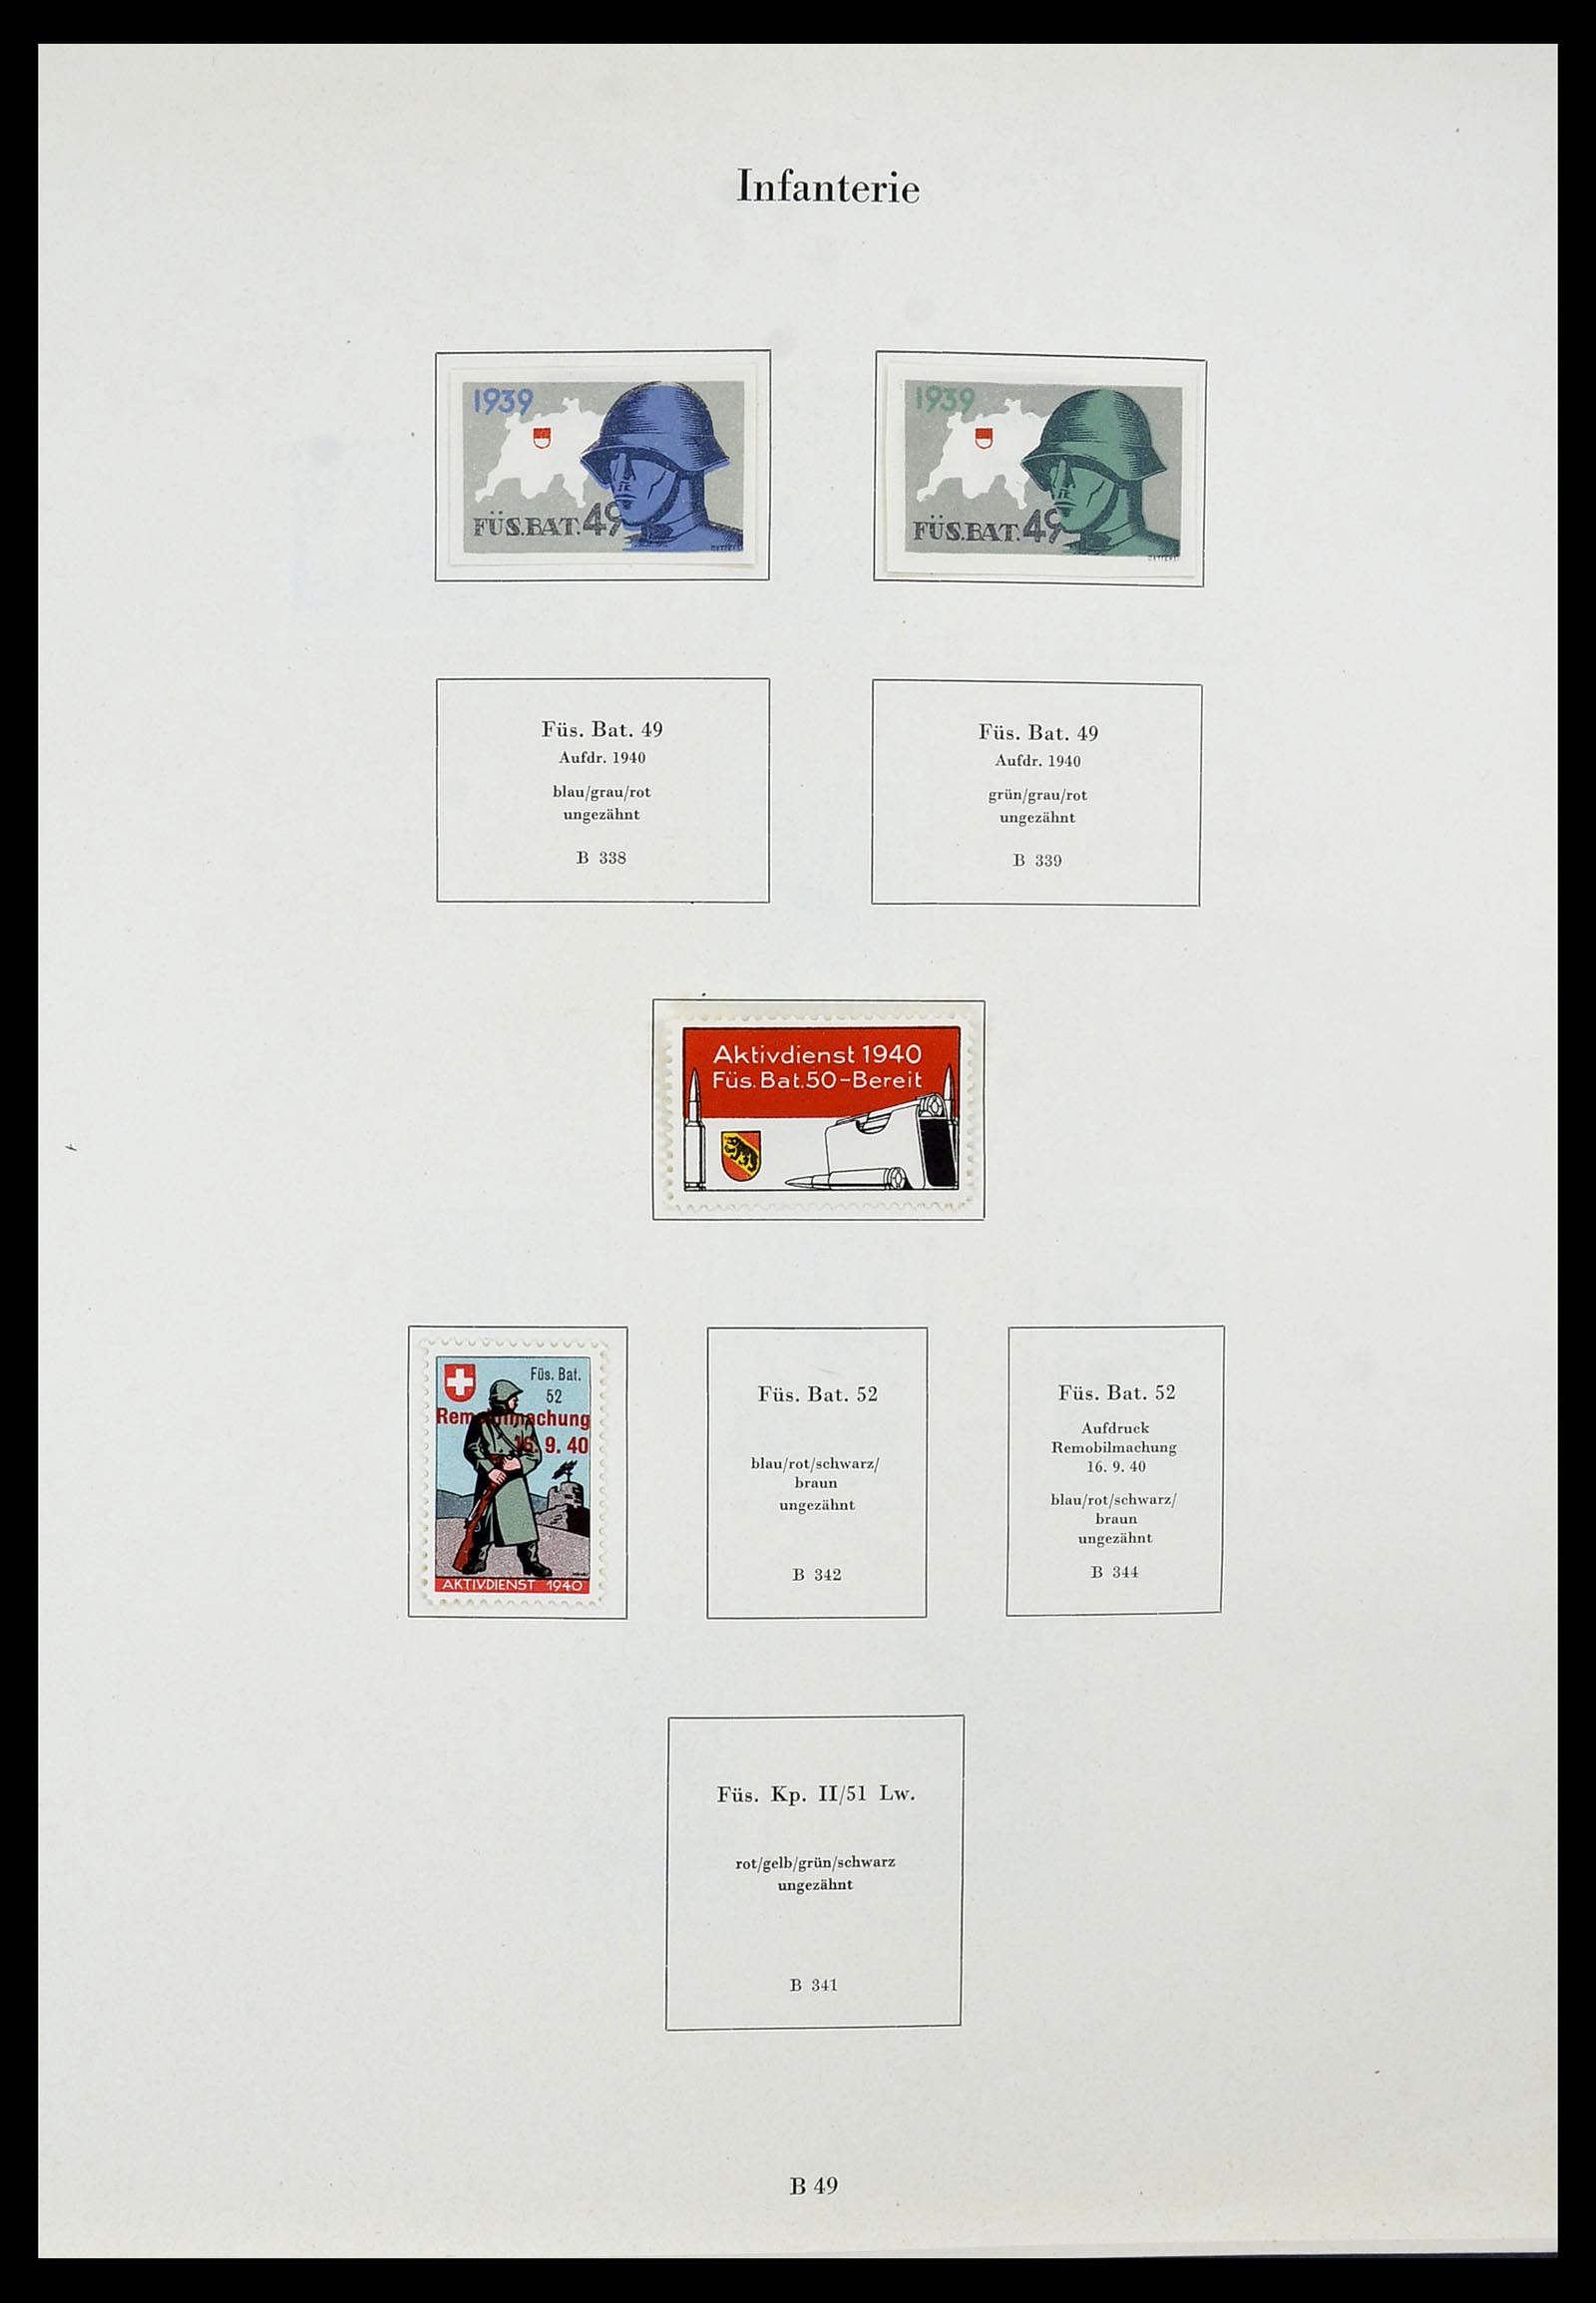 34234 074 - Stamp collection 34234 Switzerland soldier stamps 1939-1945.